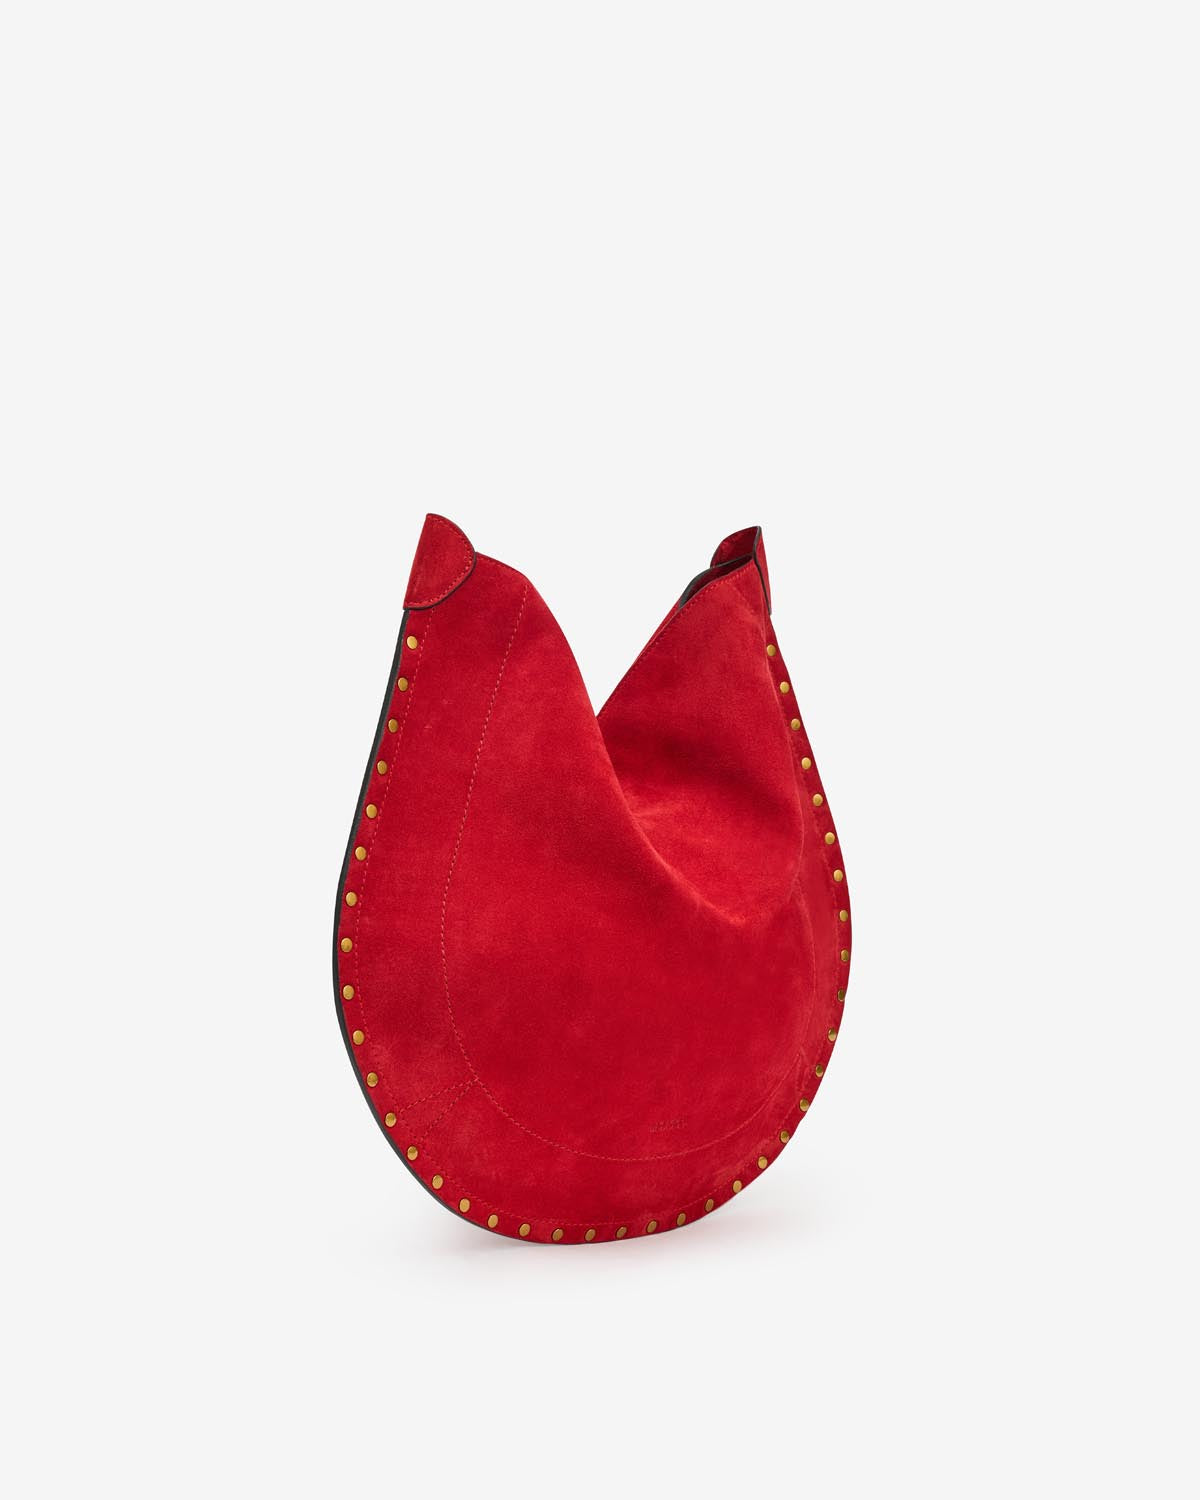 Oskan hobo soft borsa Woman Scarlet red 1